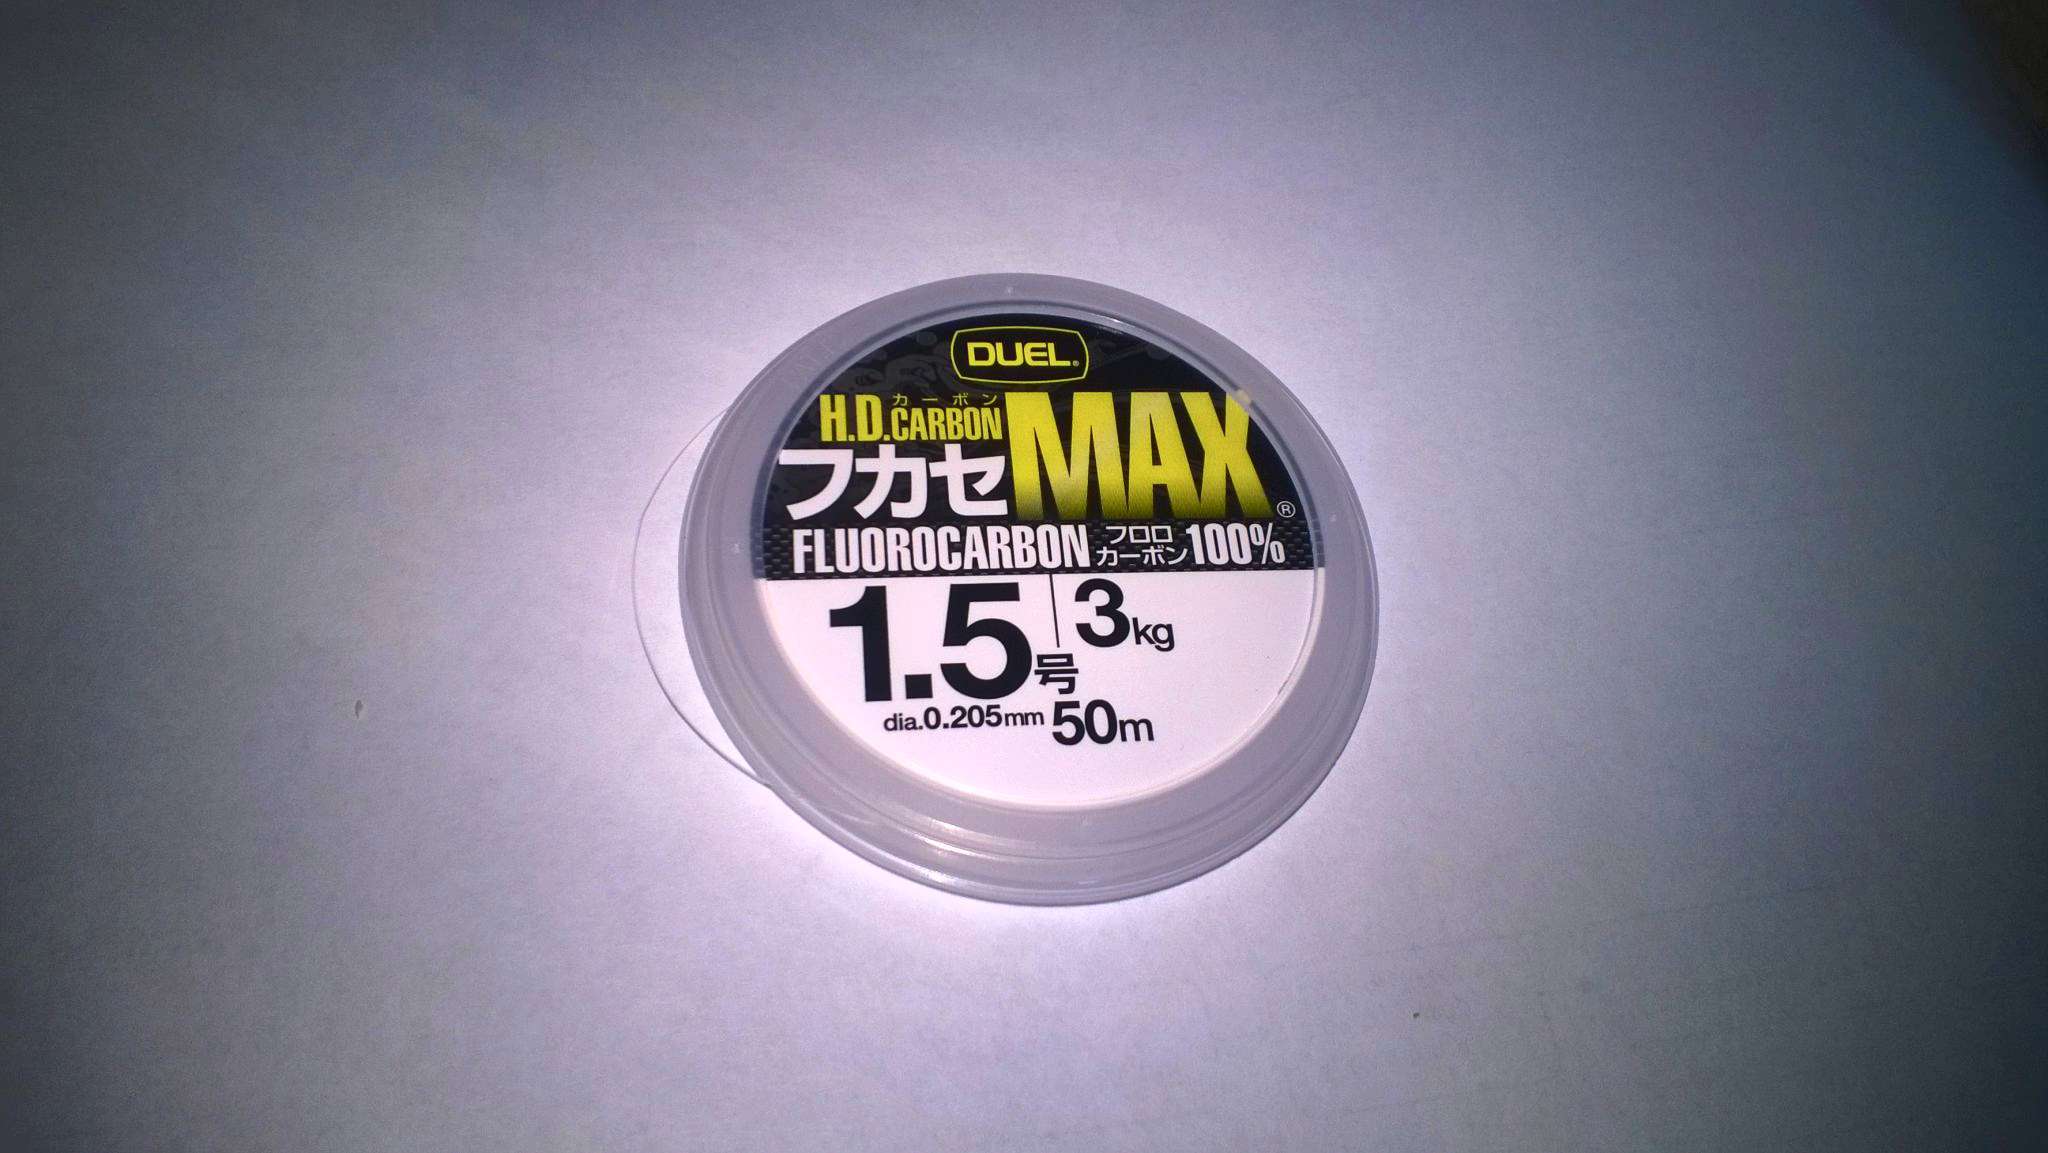 Флюорокарбон Duel H.D.Carbon MAX Fluorocarbon100% 50m #1.5 (0.205mm) 3Kg —  купить в интернет-магазине ОНЛАЙН ТРЕЙД.РУ